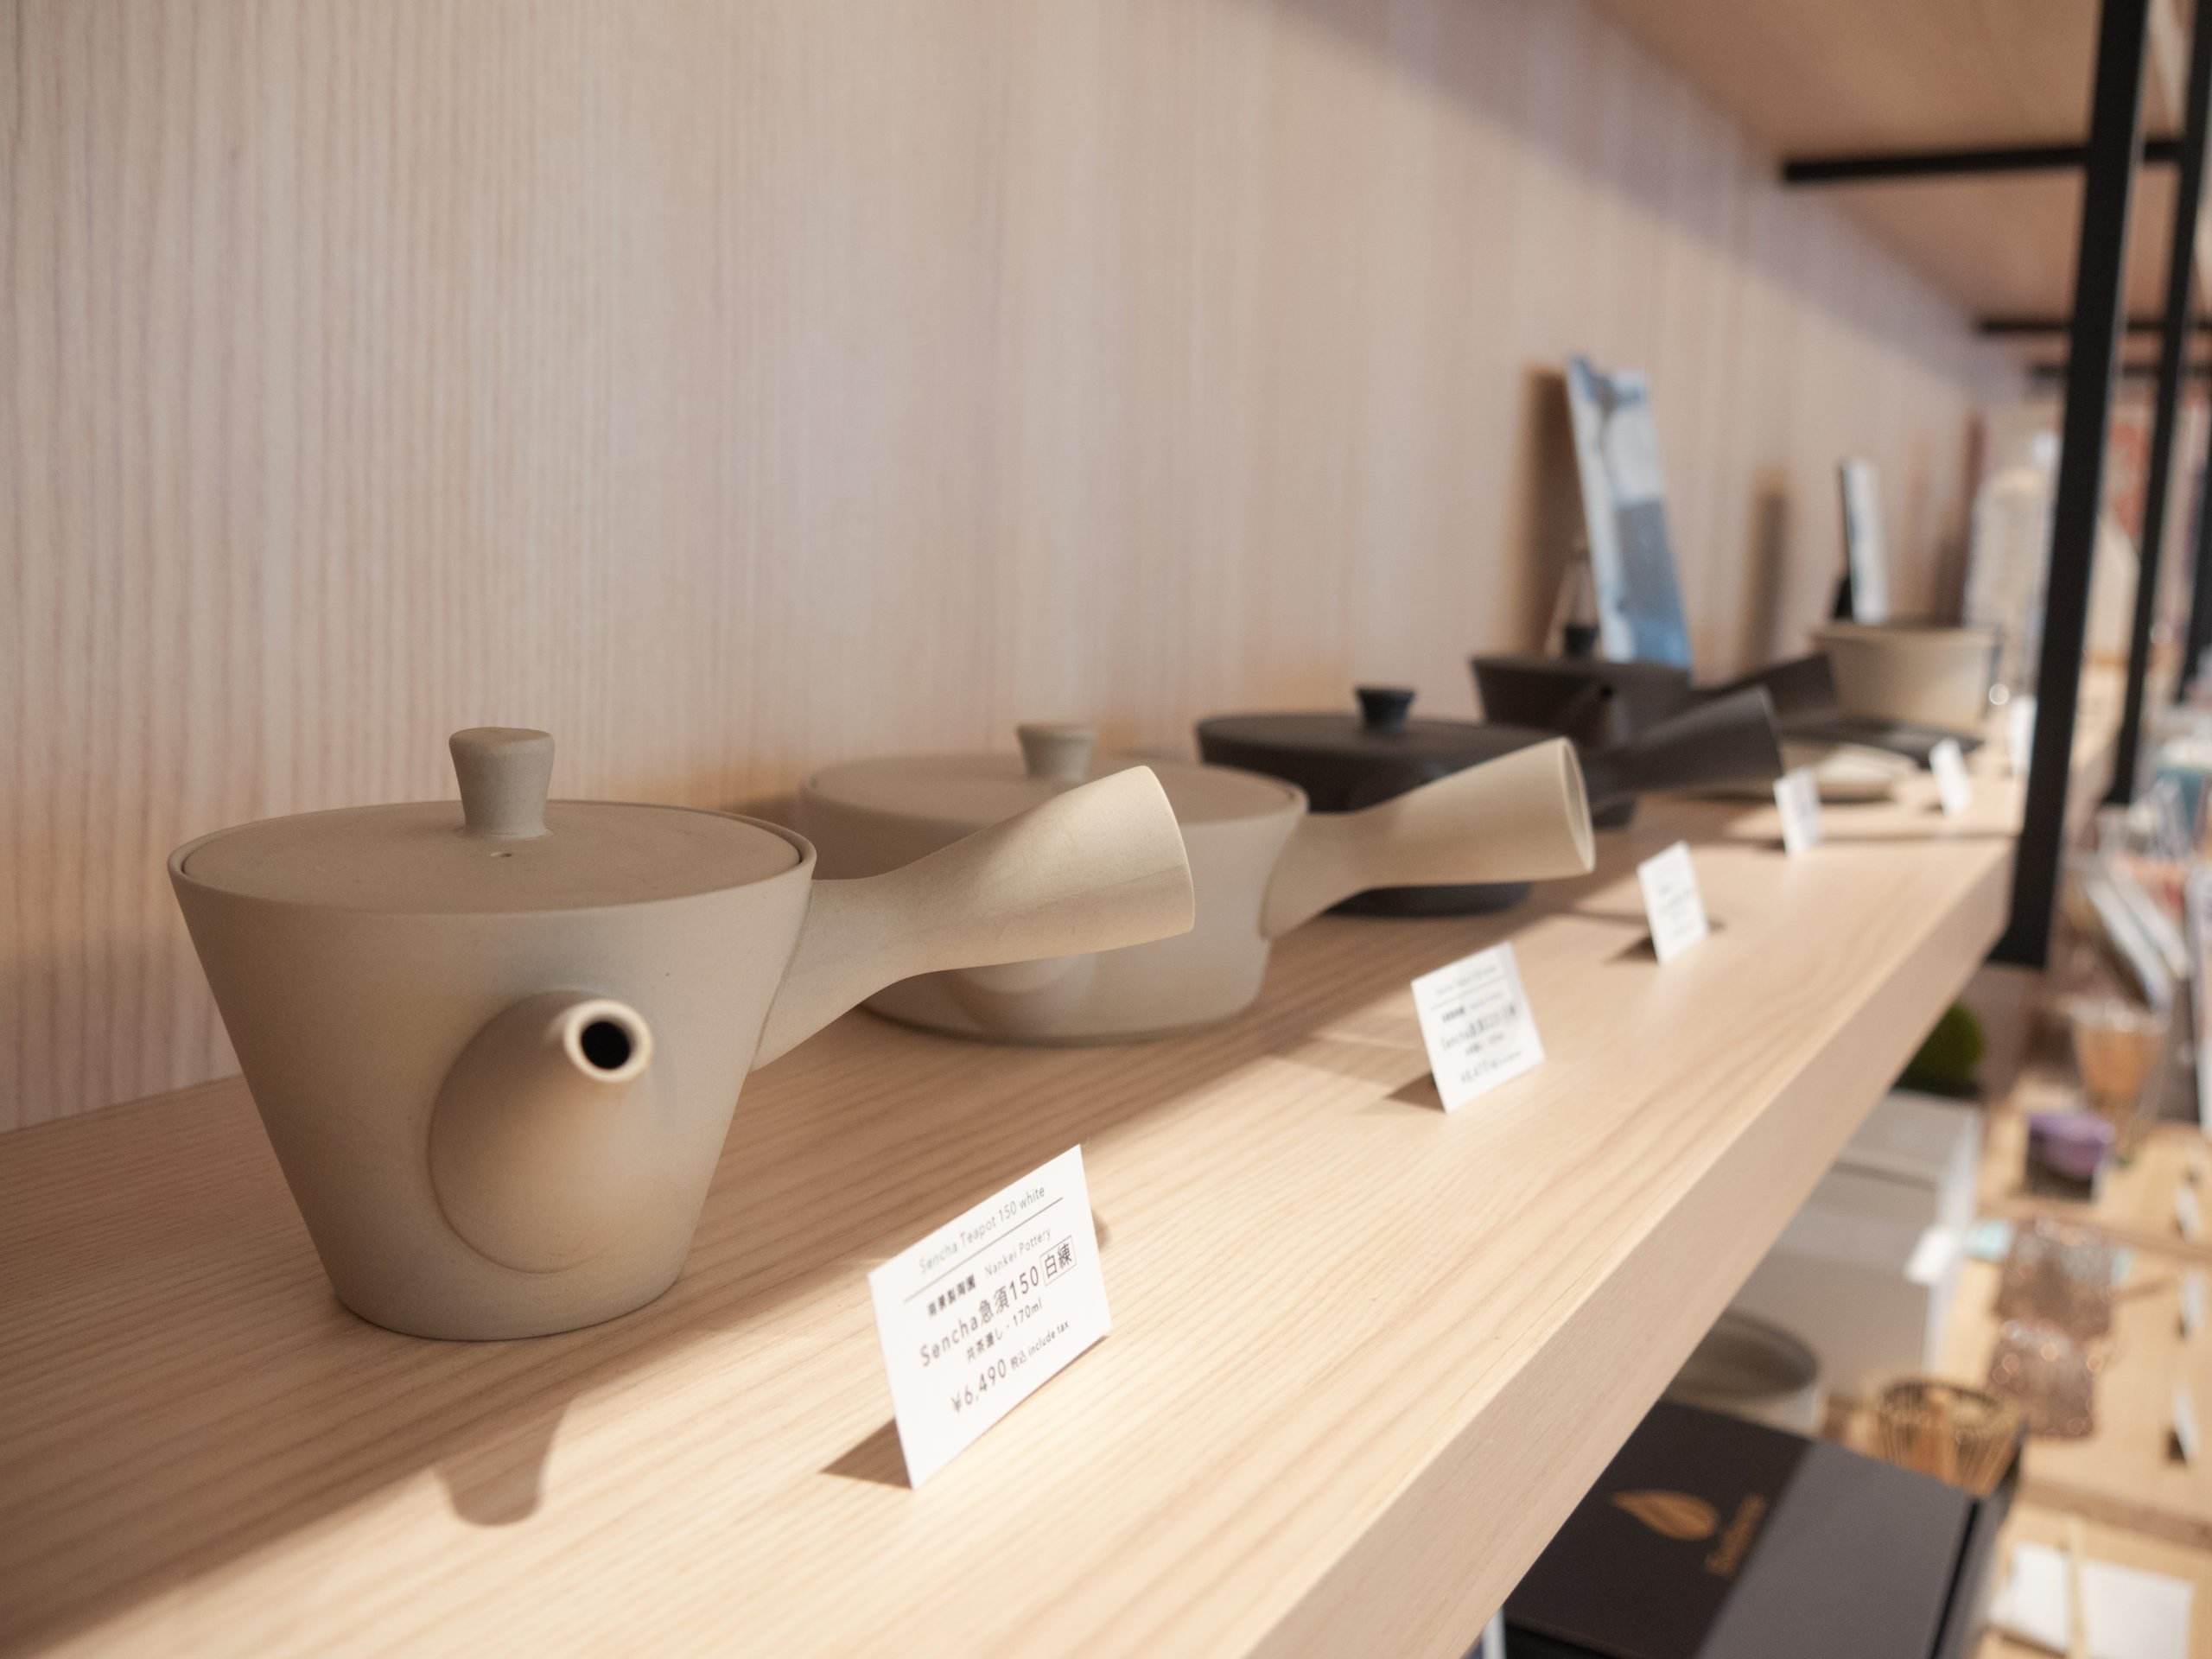 Traditional kyūsu tea pots in various shapes